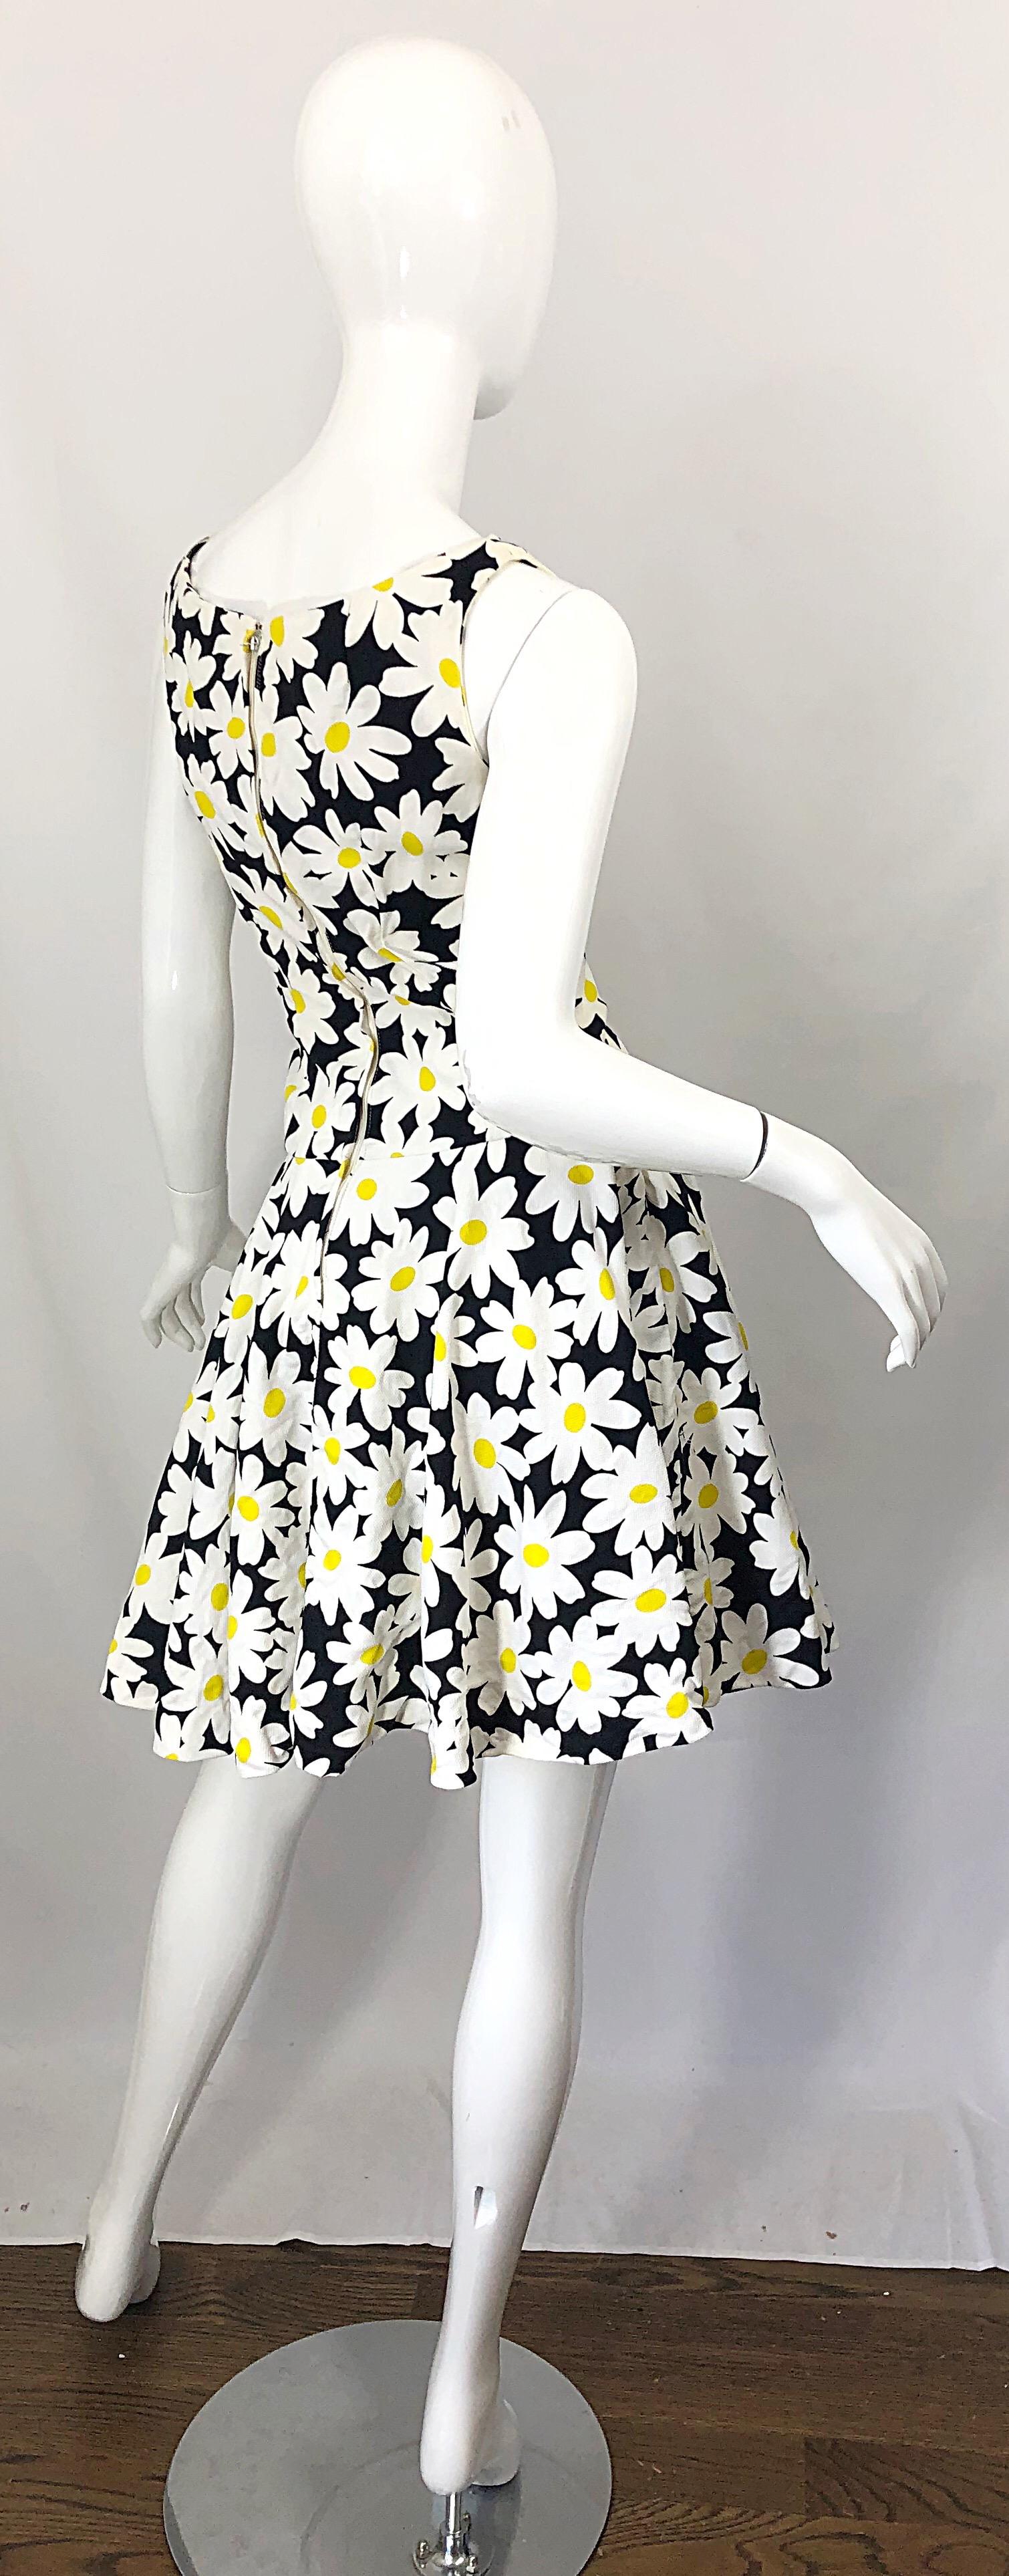 I Magnin 1960s Black and White Daisy Print Pique Cotton Vintage 60s A Line Dress For Sale 5